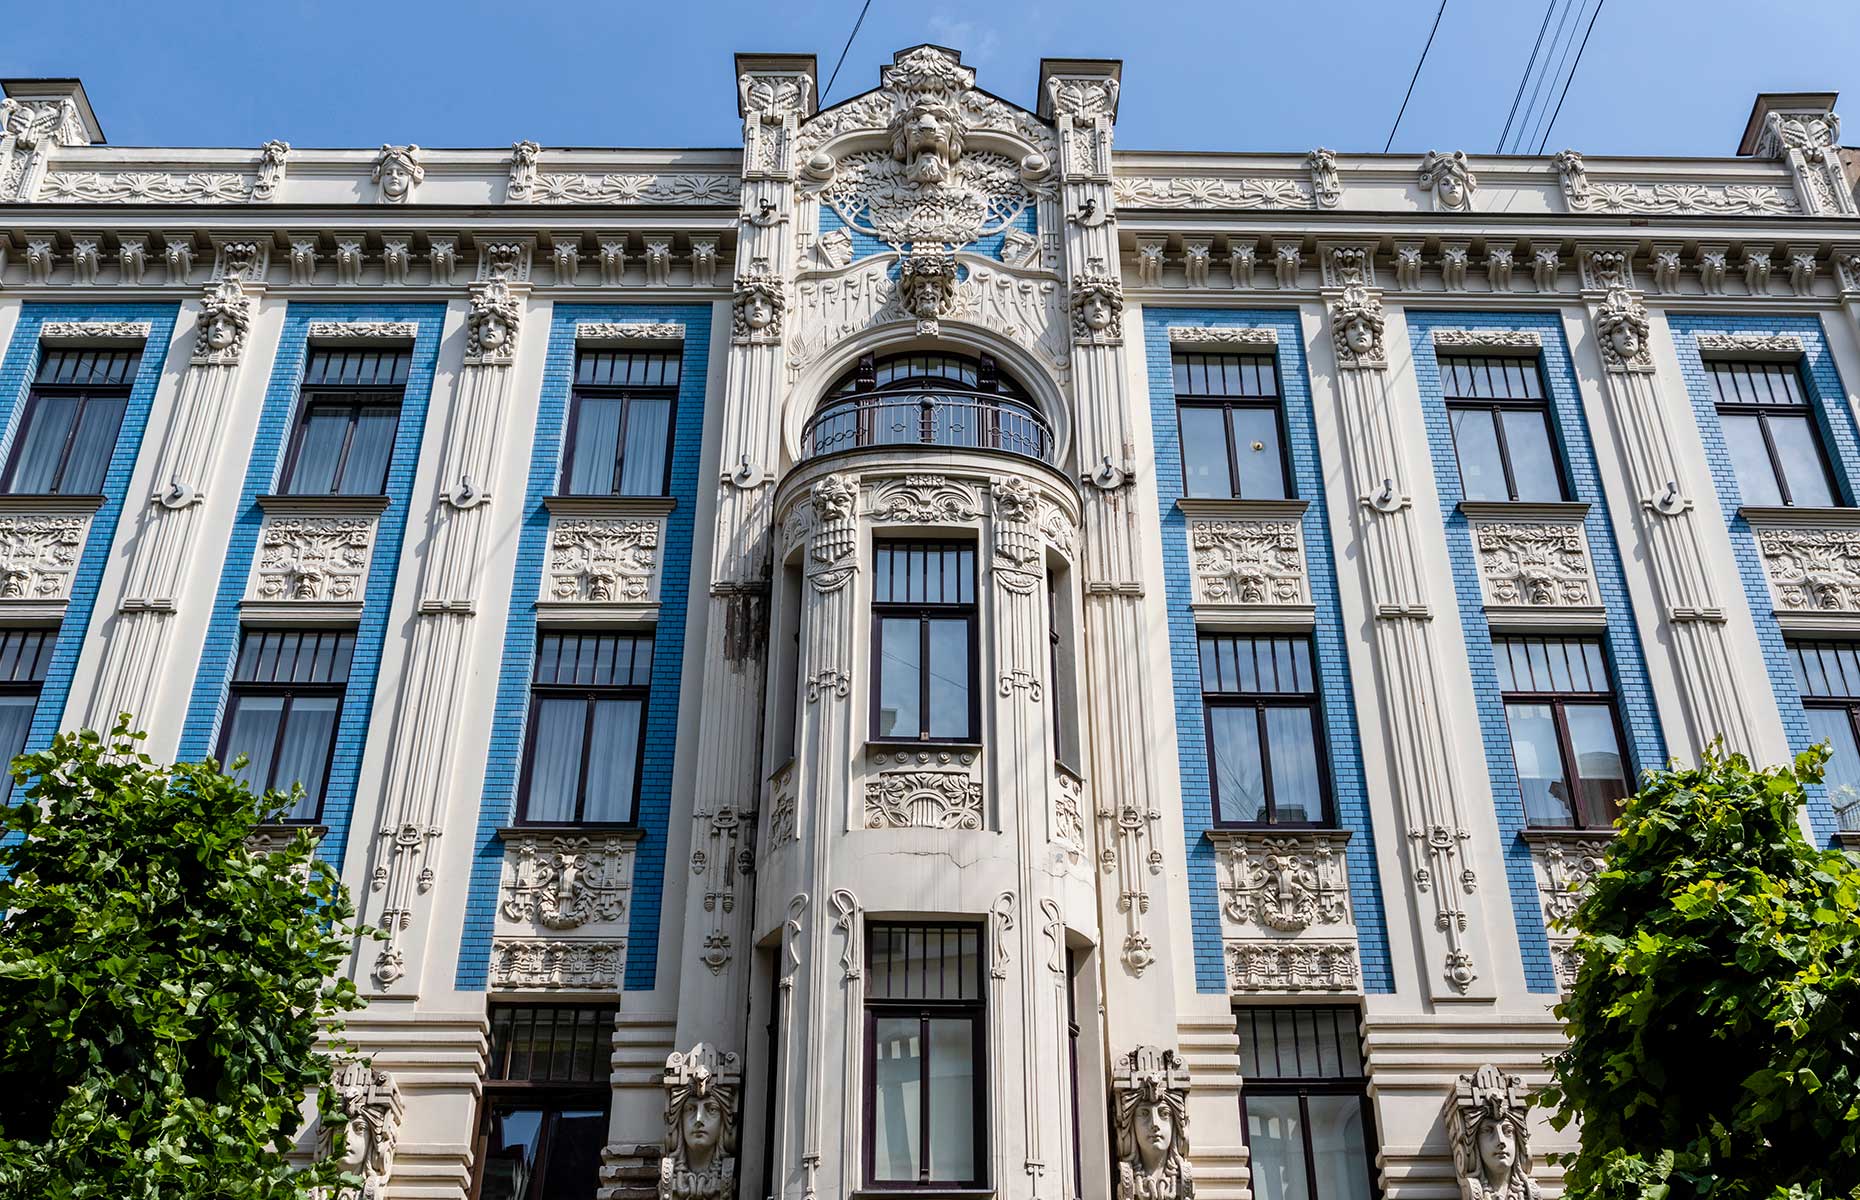 Facade of Art Nouveau building in the Alberta Street in Riga, Latvia (Image: fotojanis/Shutterstock)